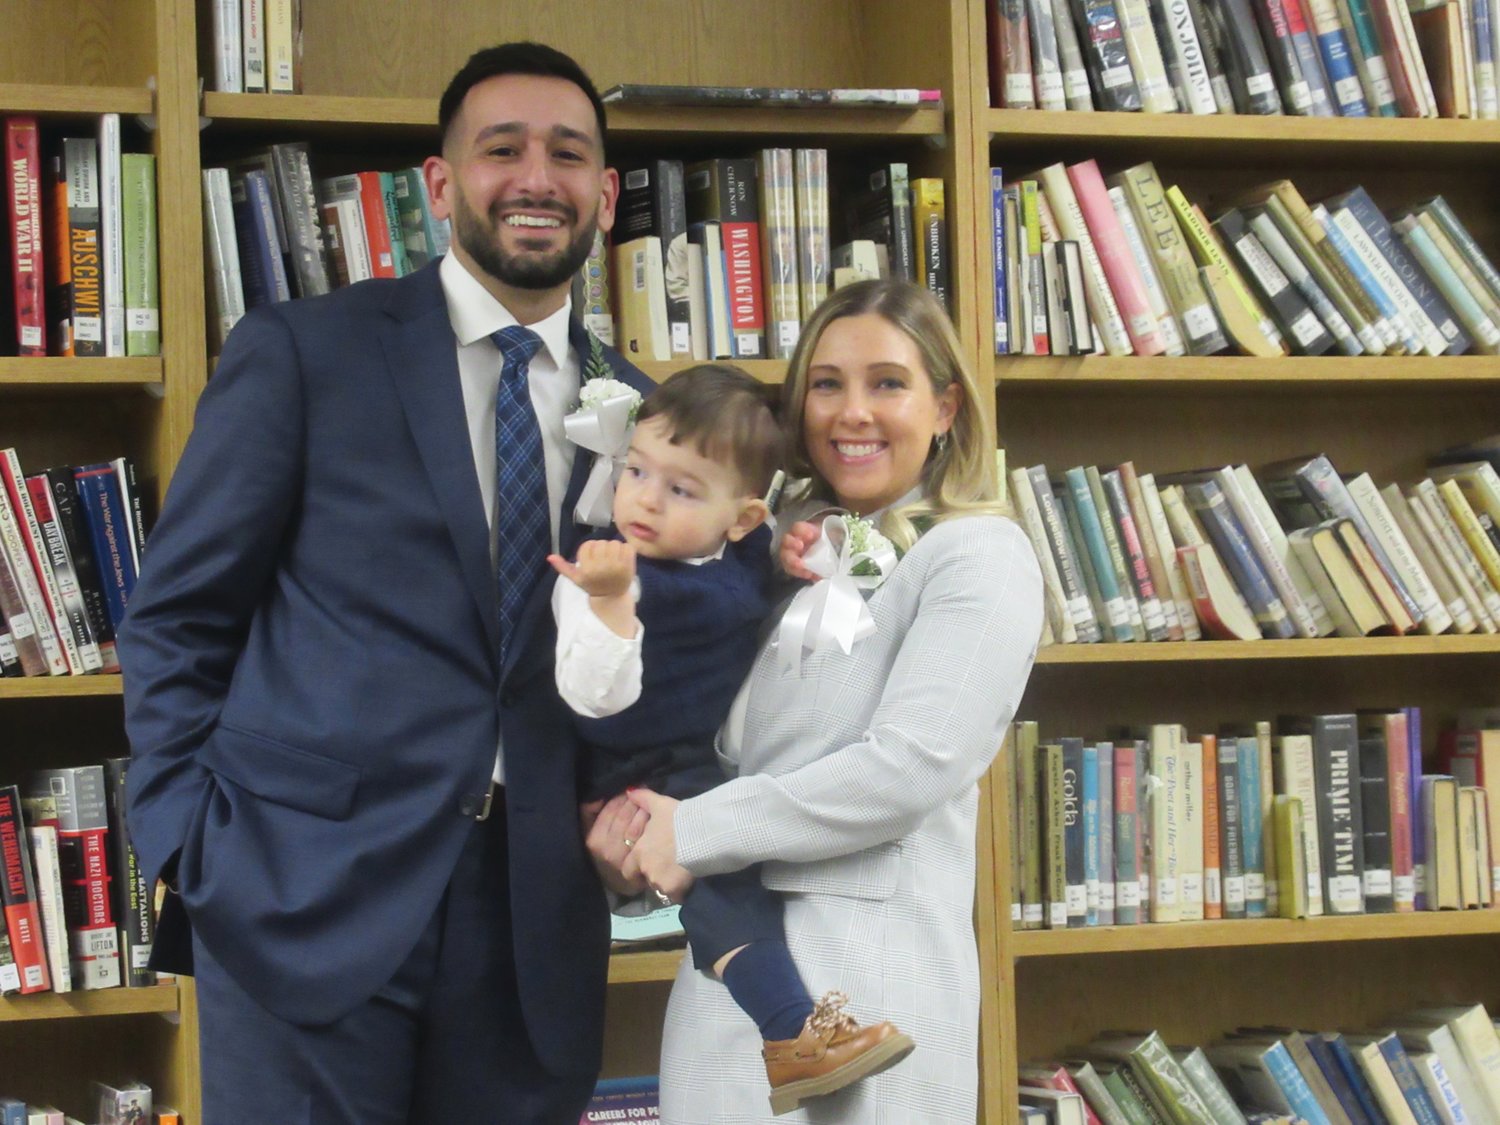 FIRST FAMILY: Johnston’s new first family includes Mayor Joseph Polisena Jr., his wife Samantha and their son Joseph Michael Polisena III.